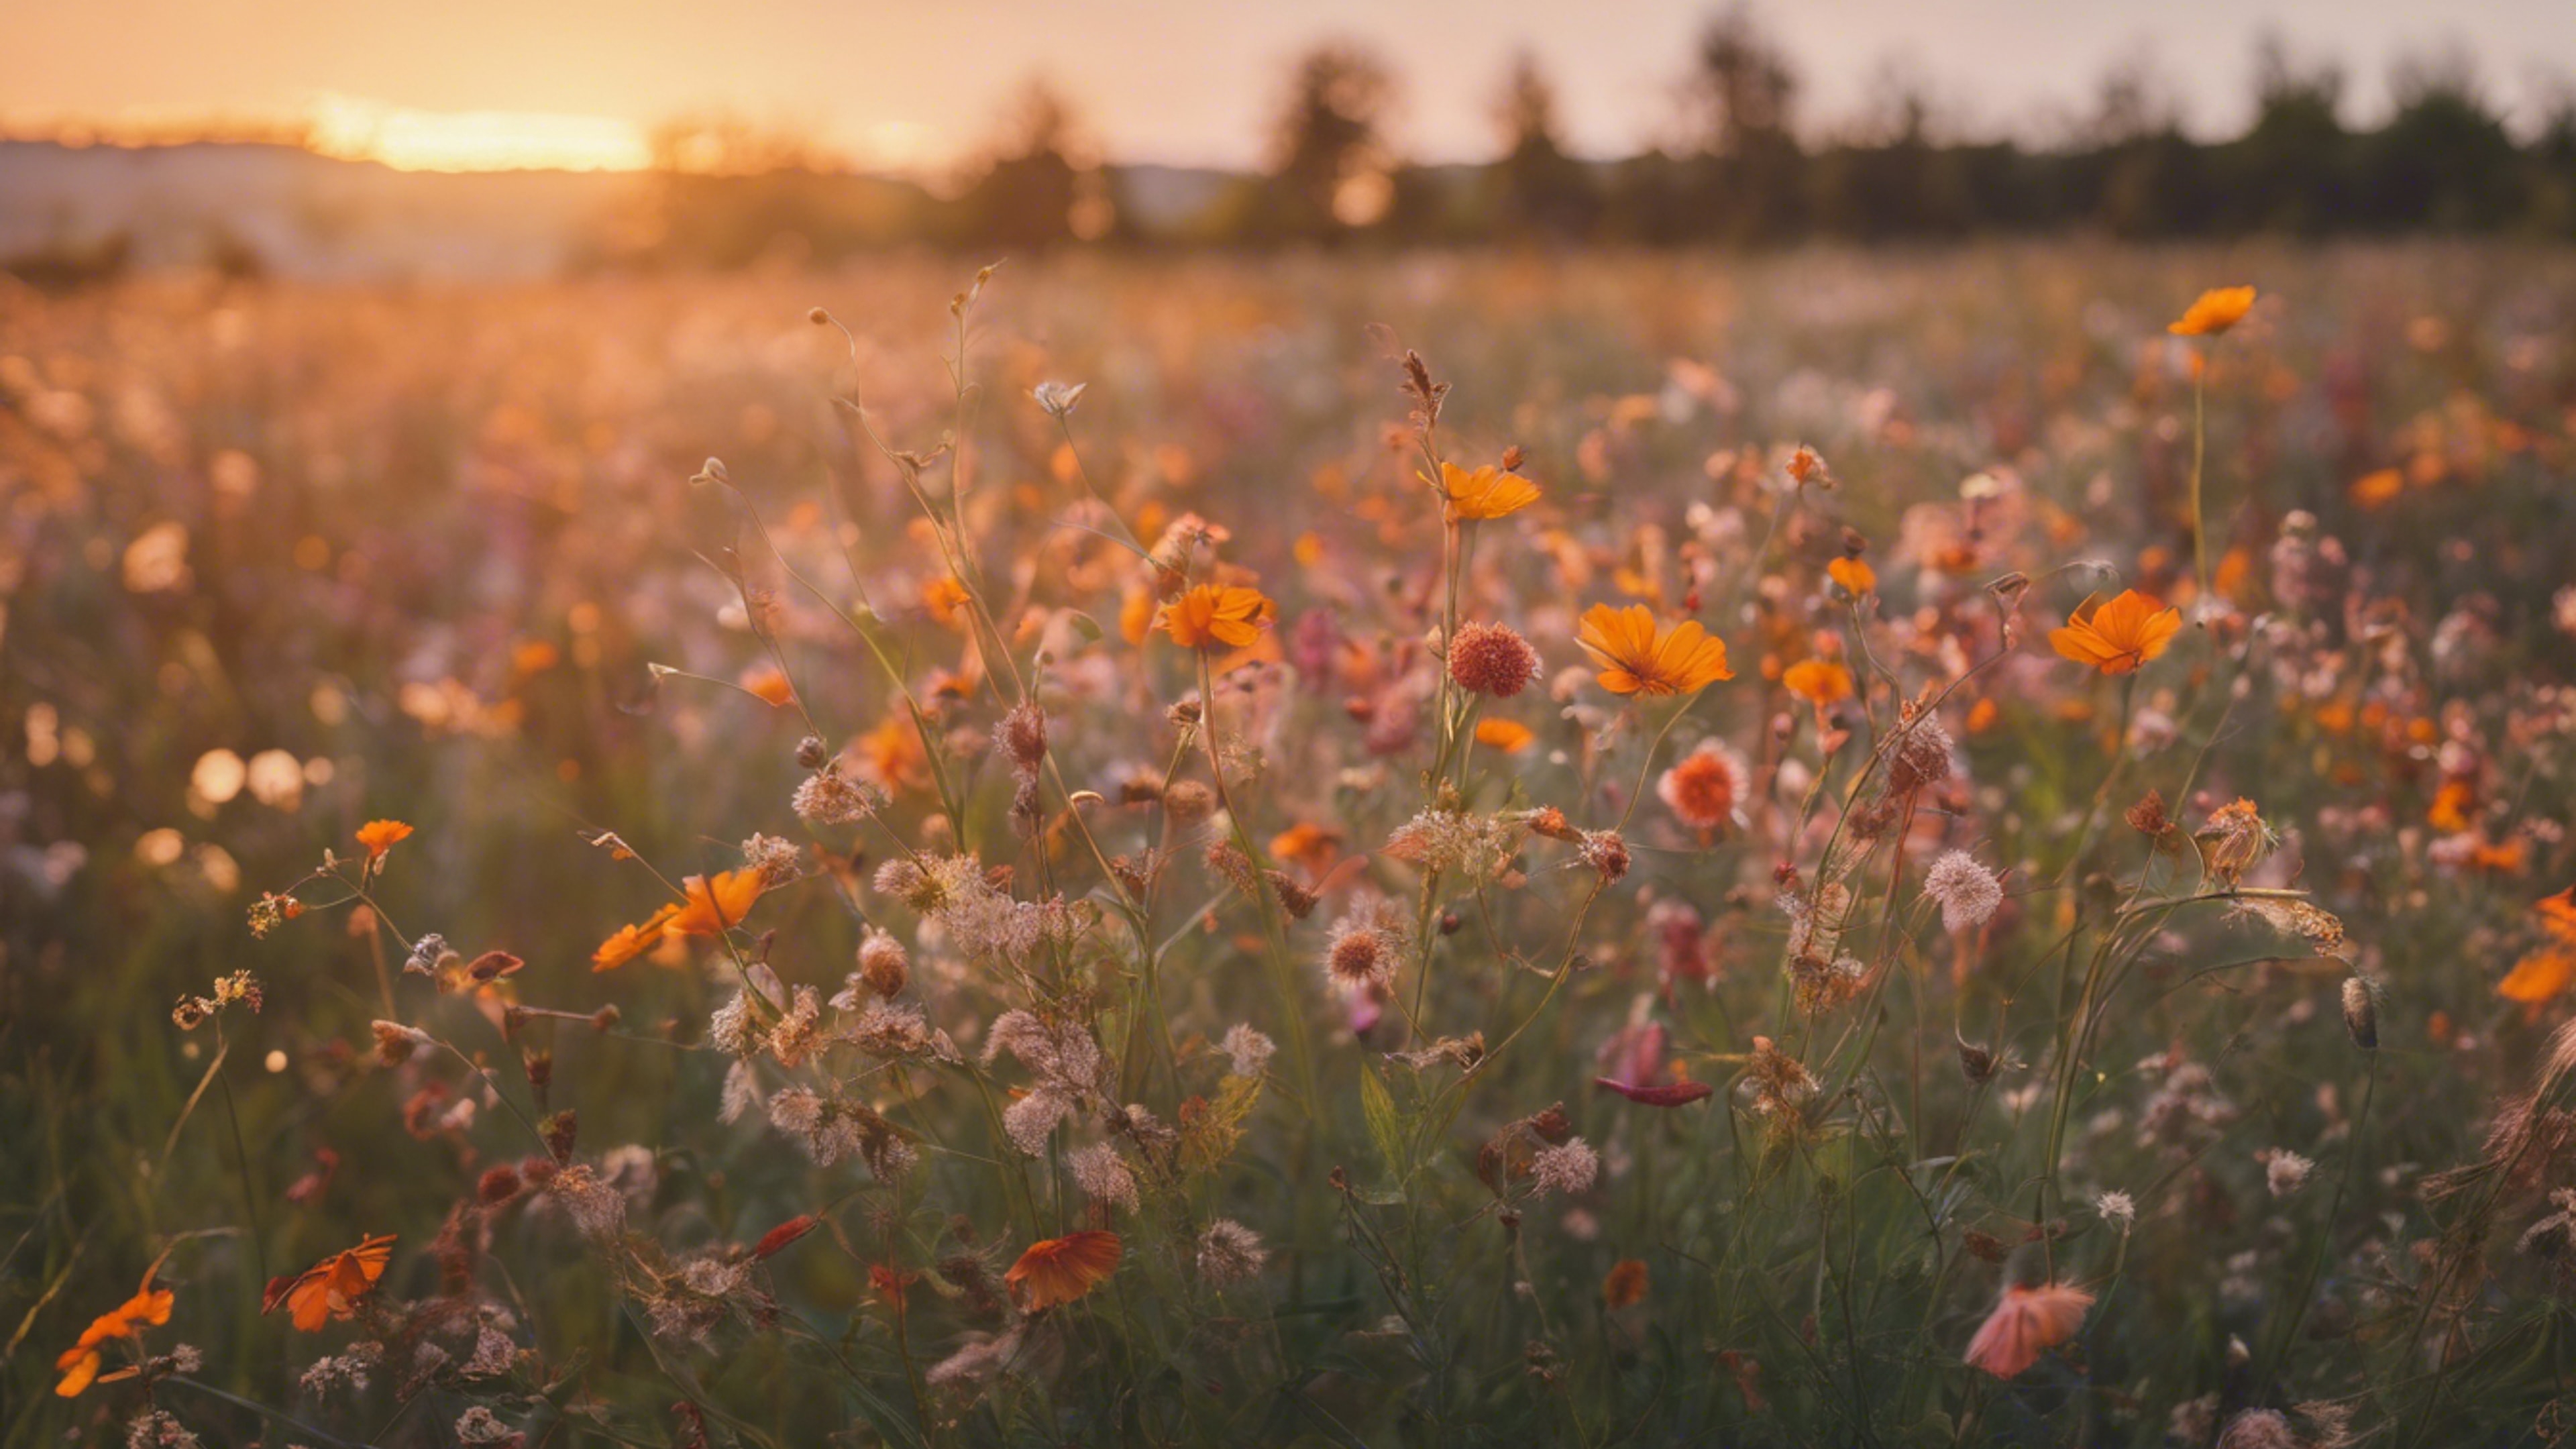 A nostalgic field of wildflowers in sunset hues. Tapéta[1a5d684a5d8746a6914f]